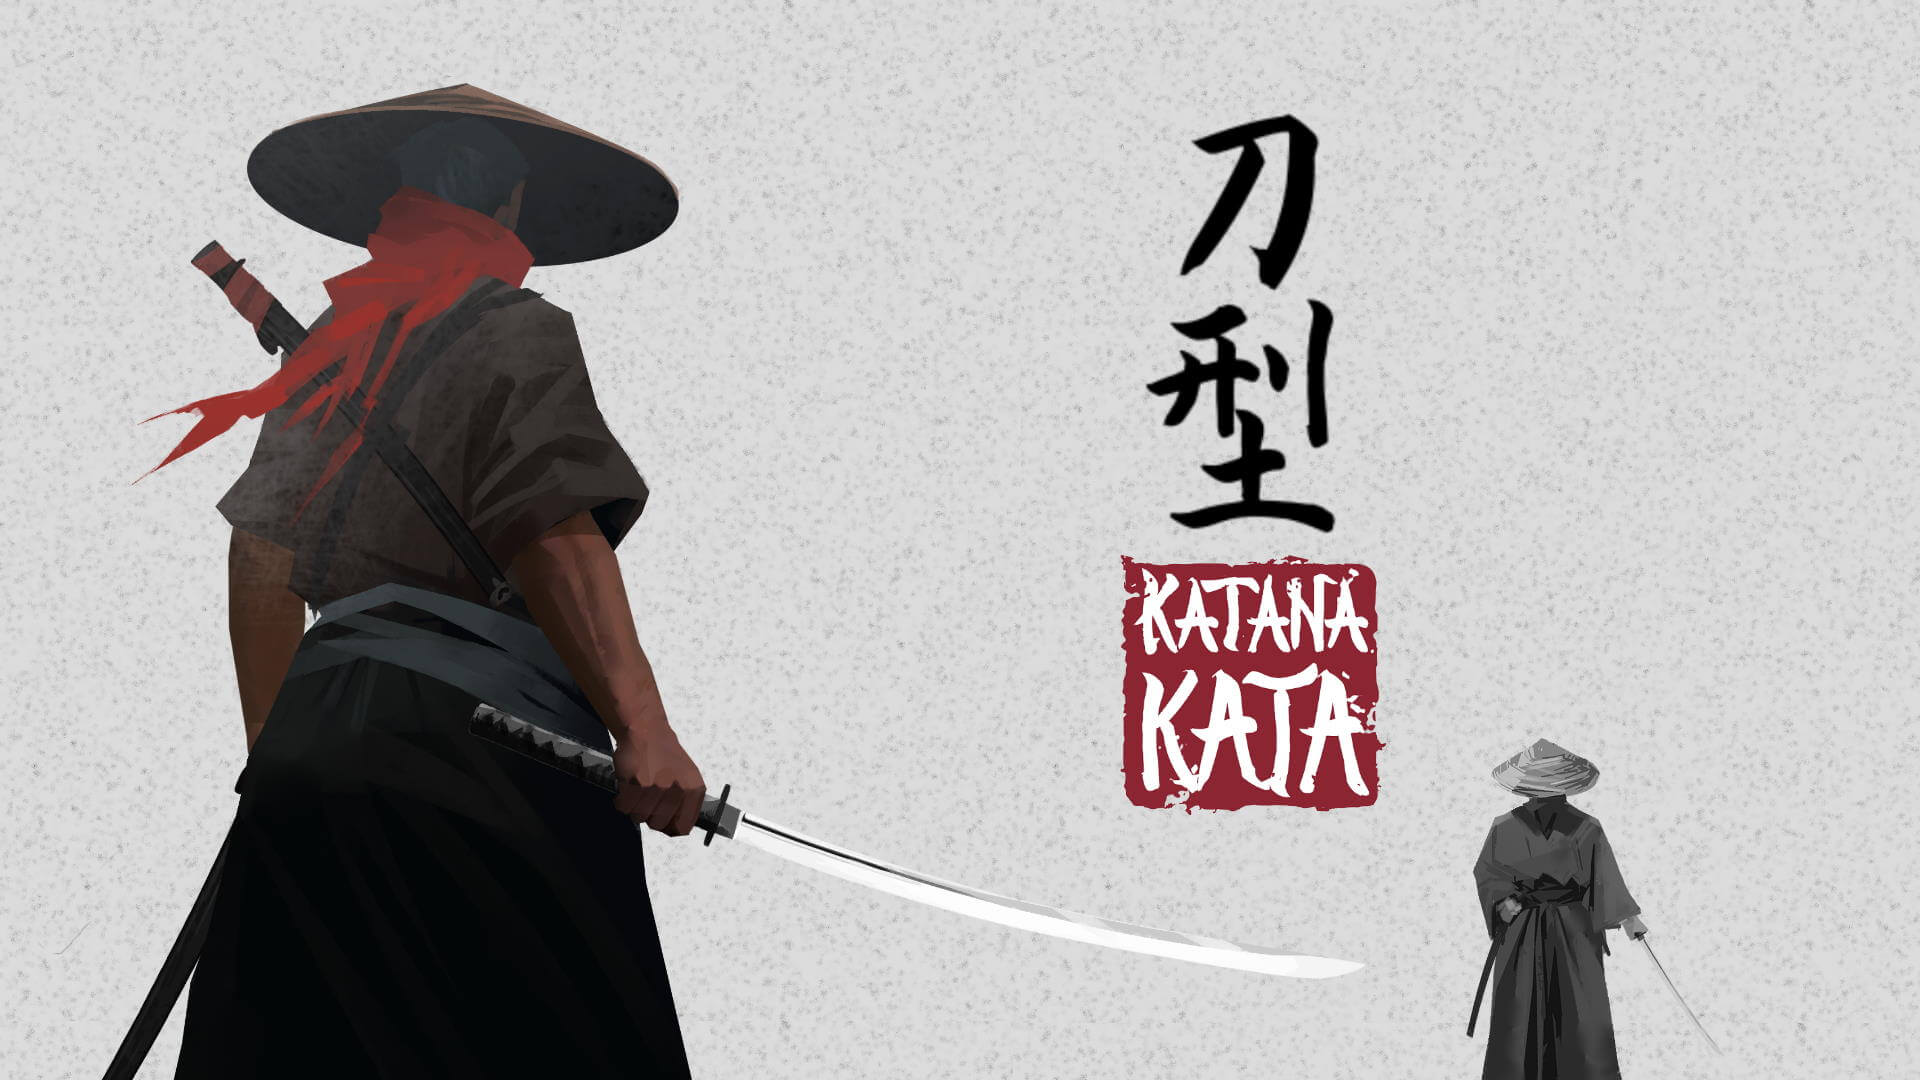 Katana Kata Free PC Download